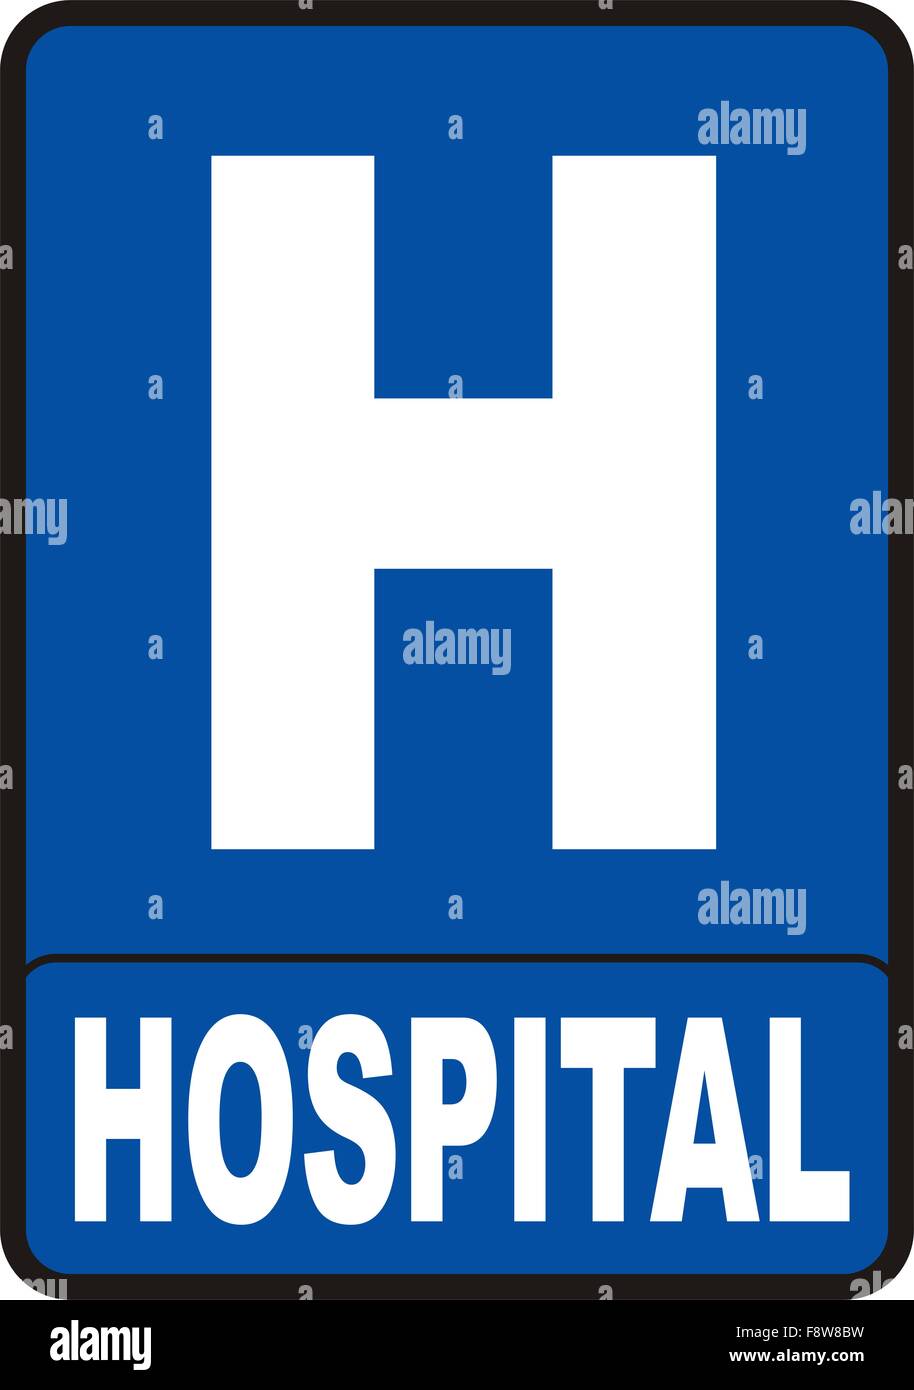 Hospital sign Stock Photo